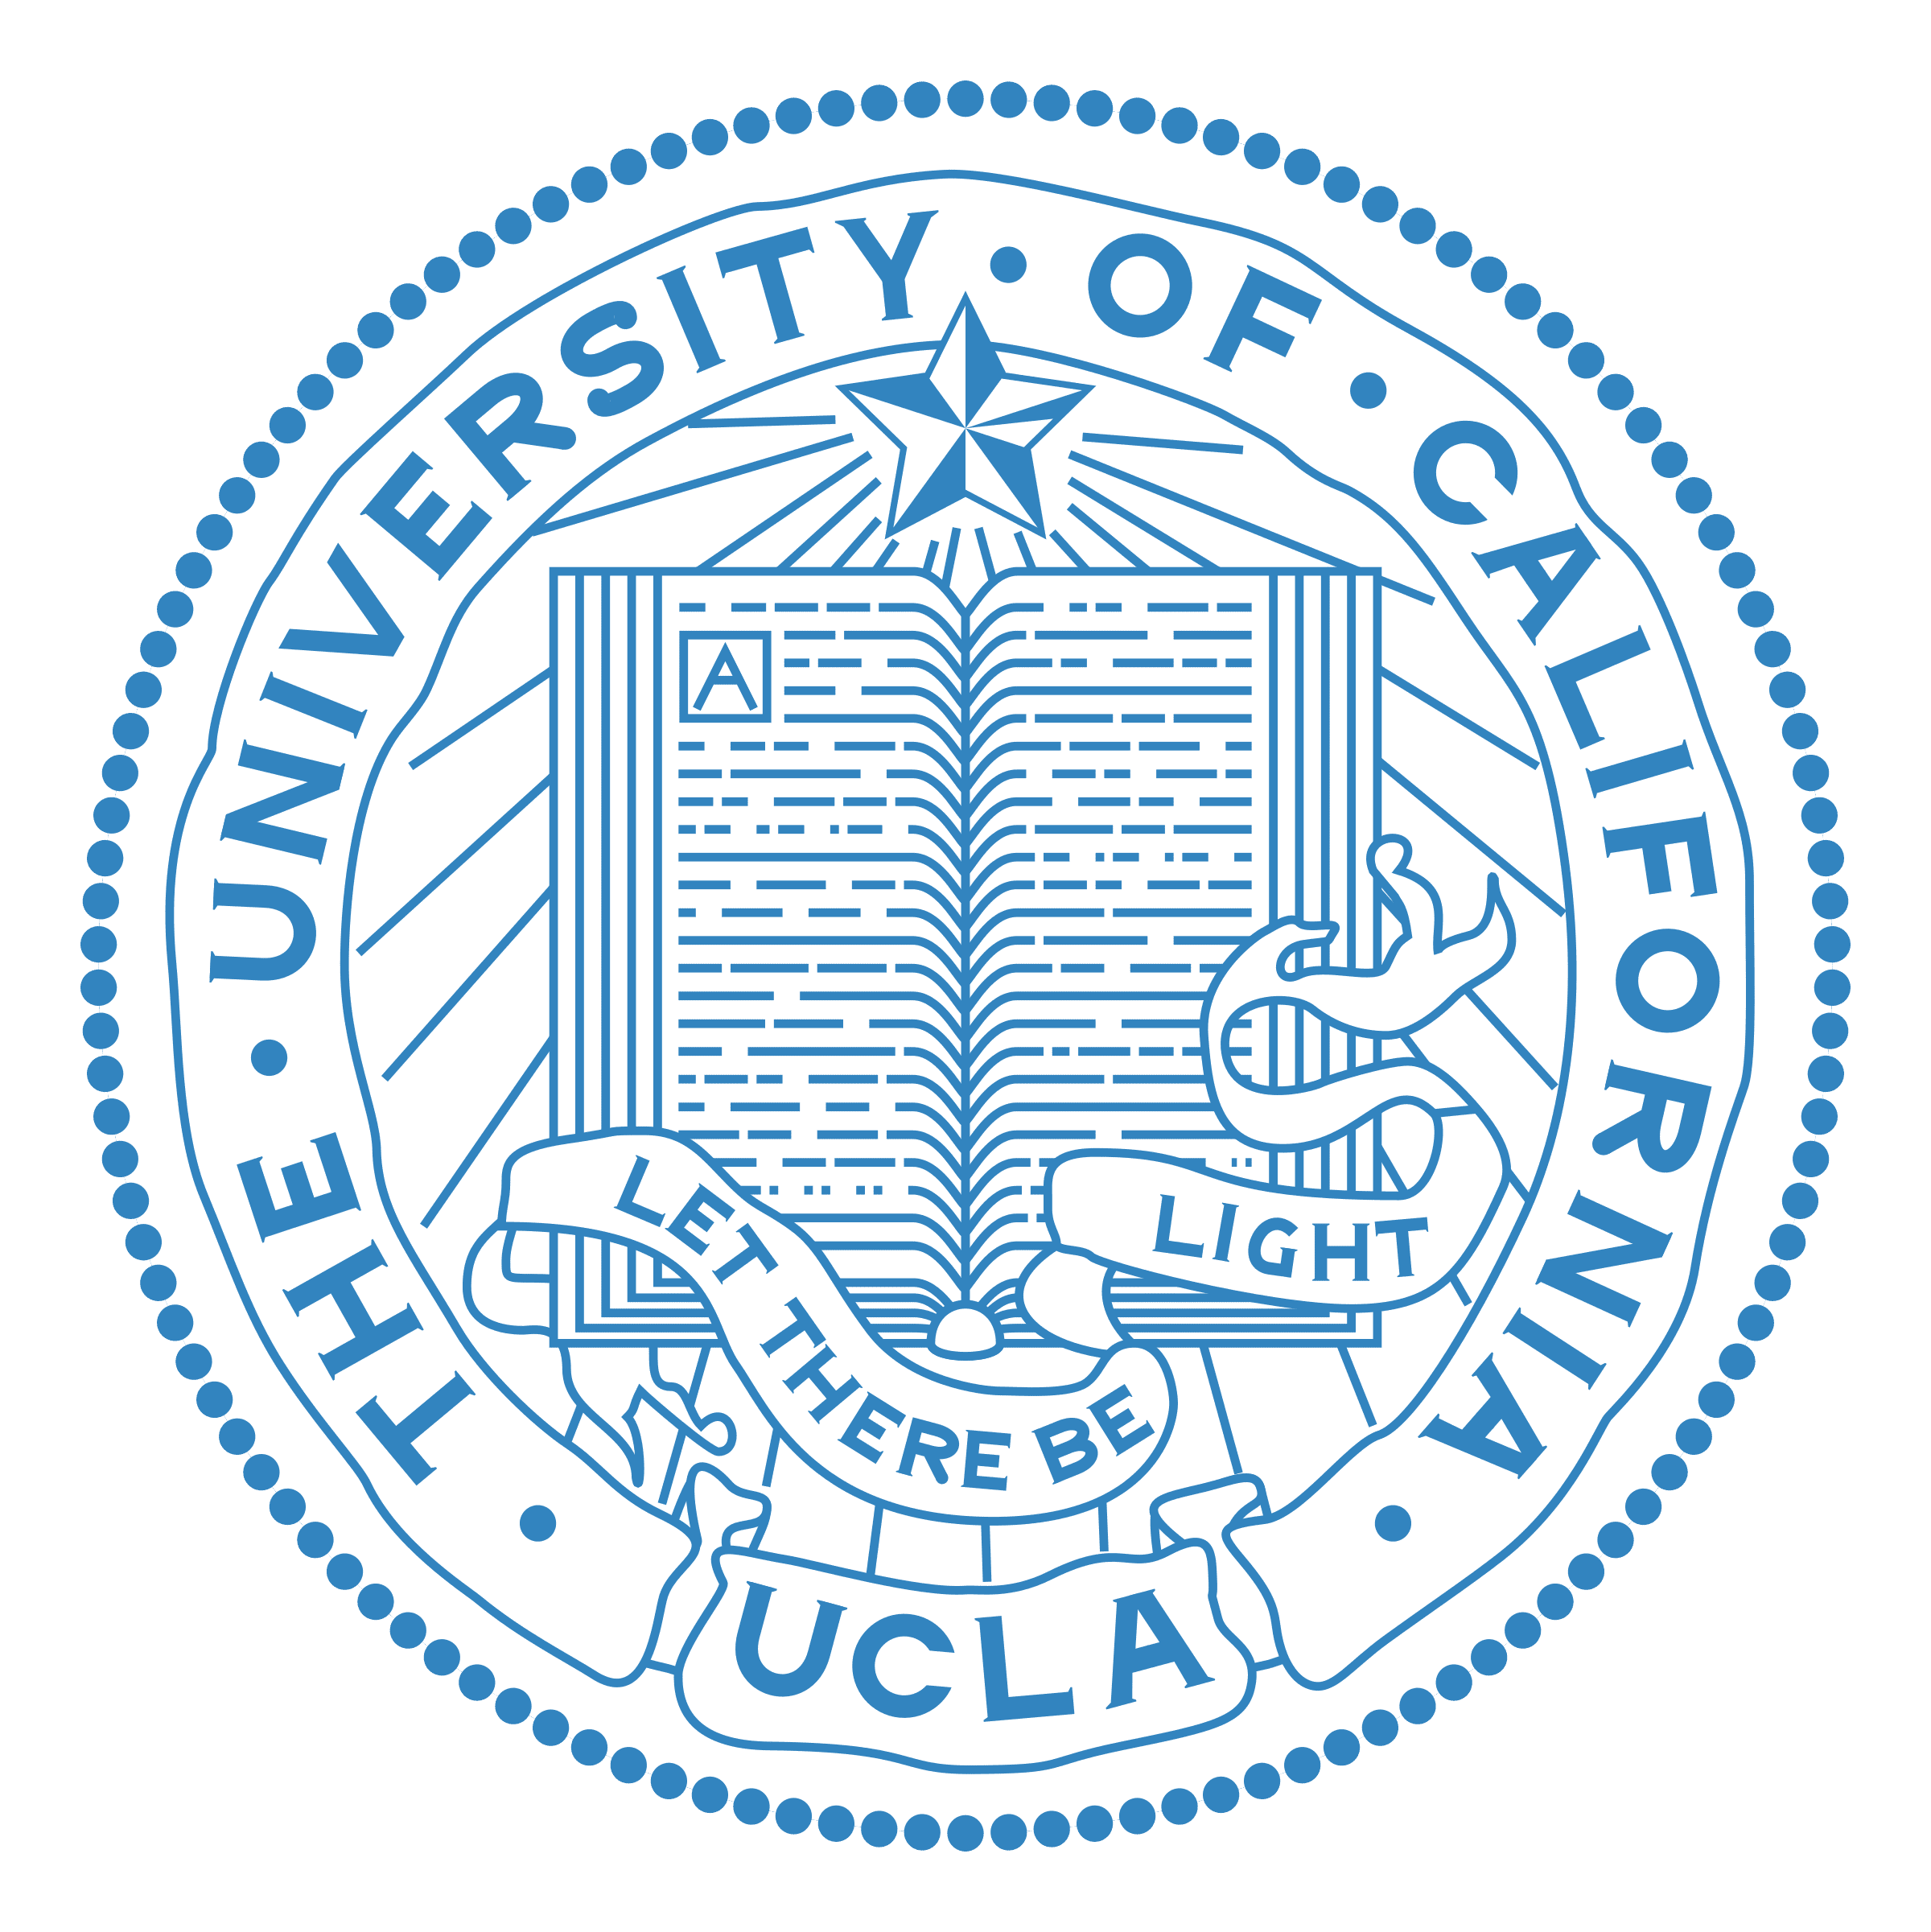 Customer University of California Los Angeles